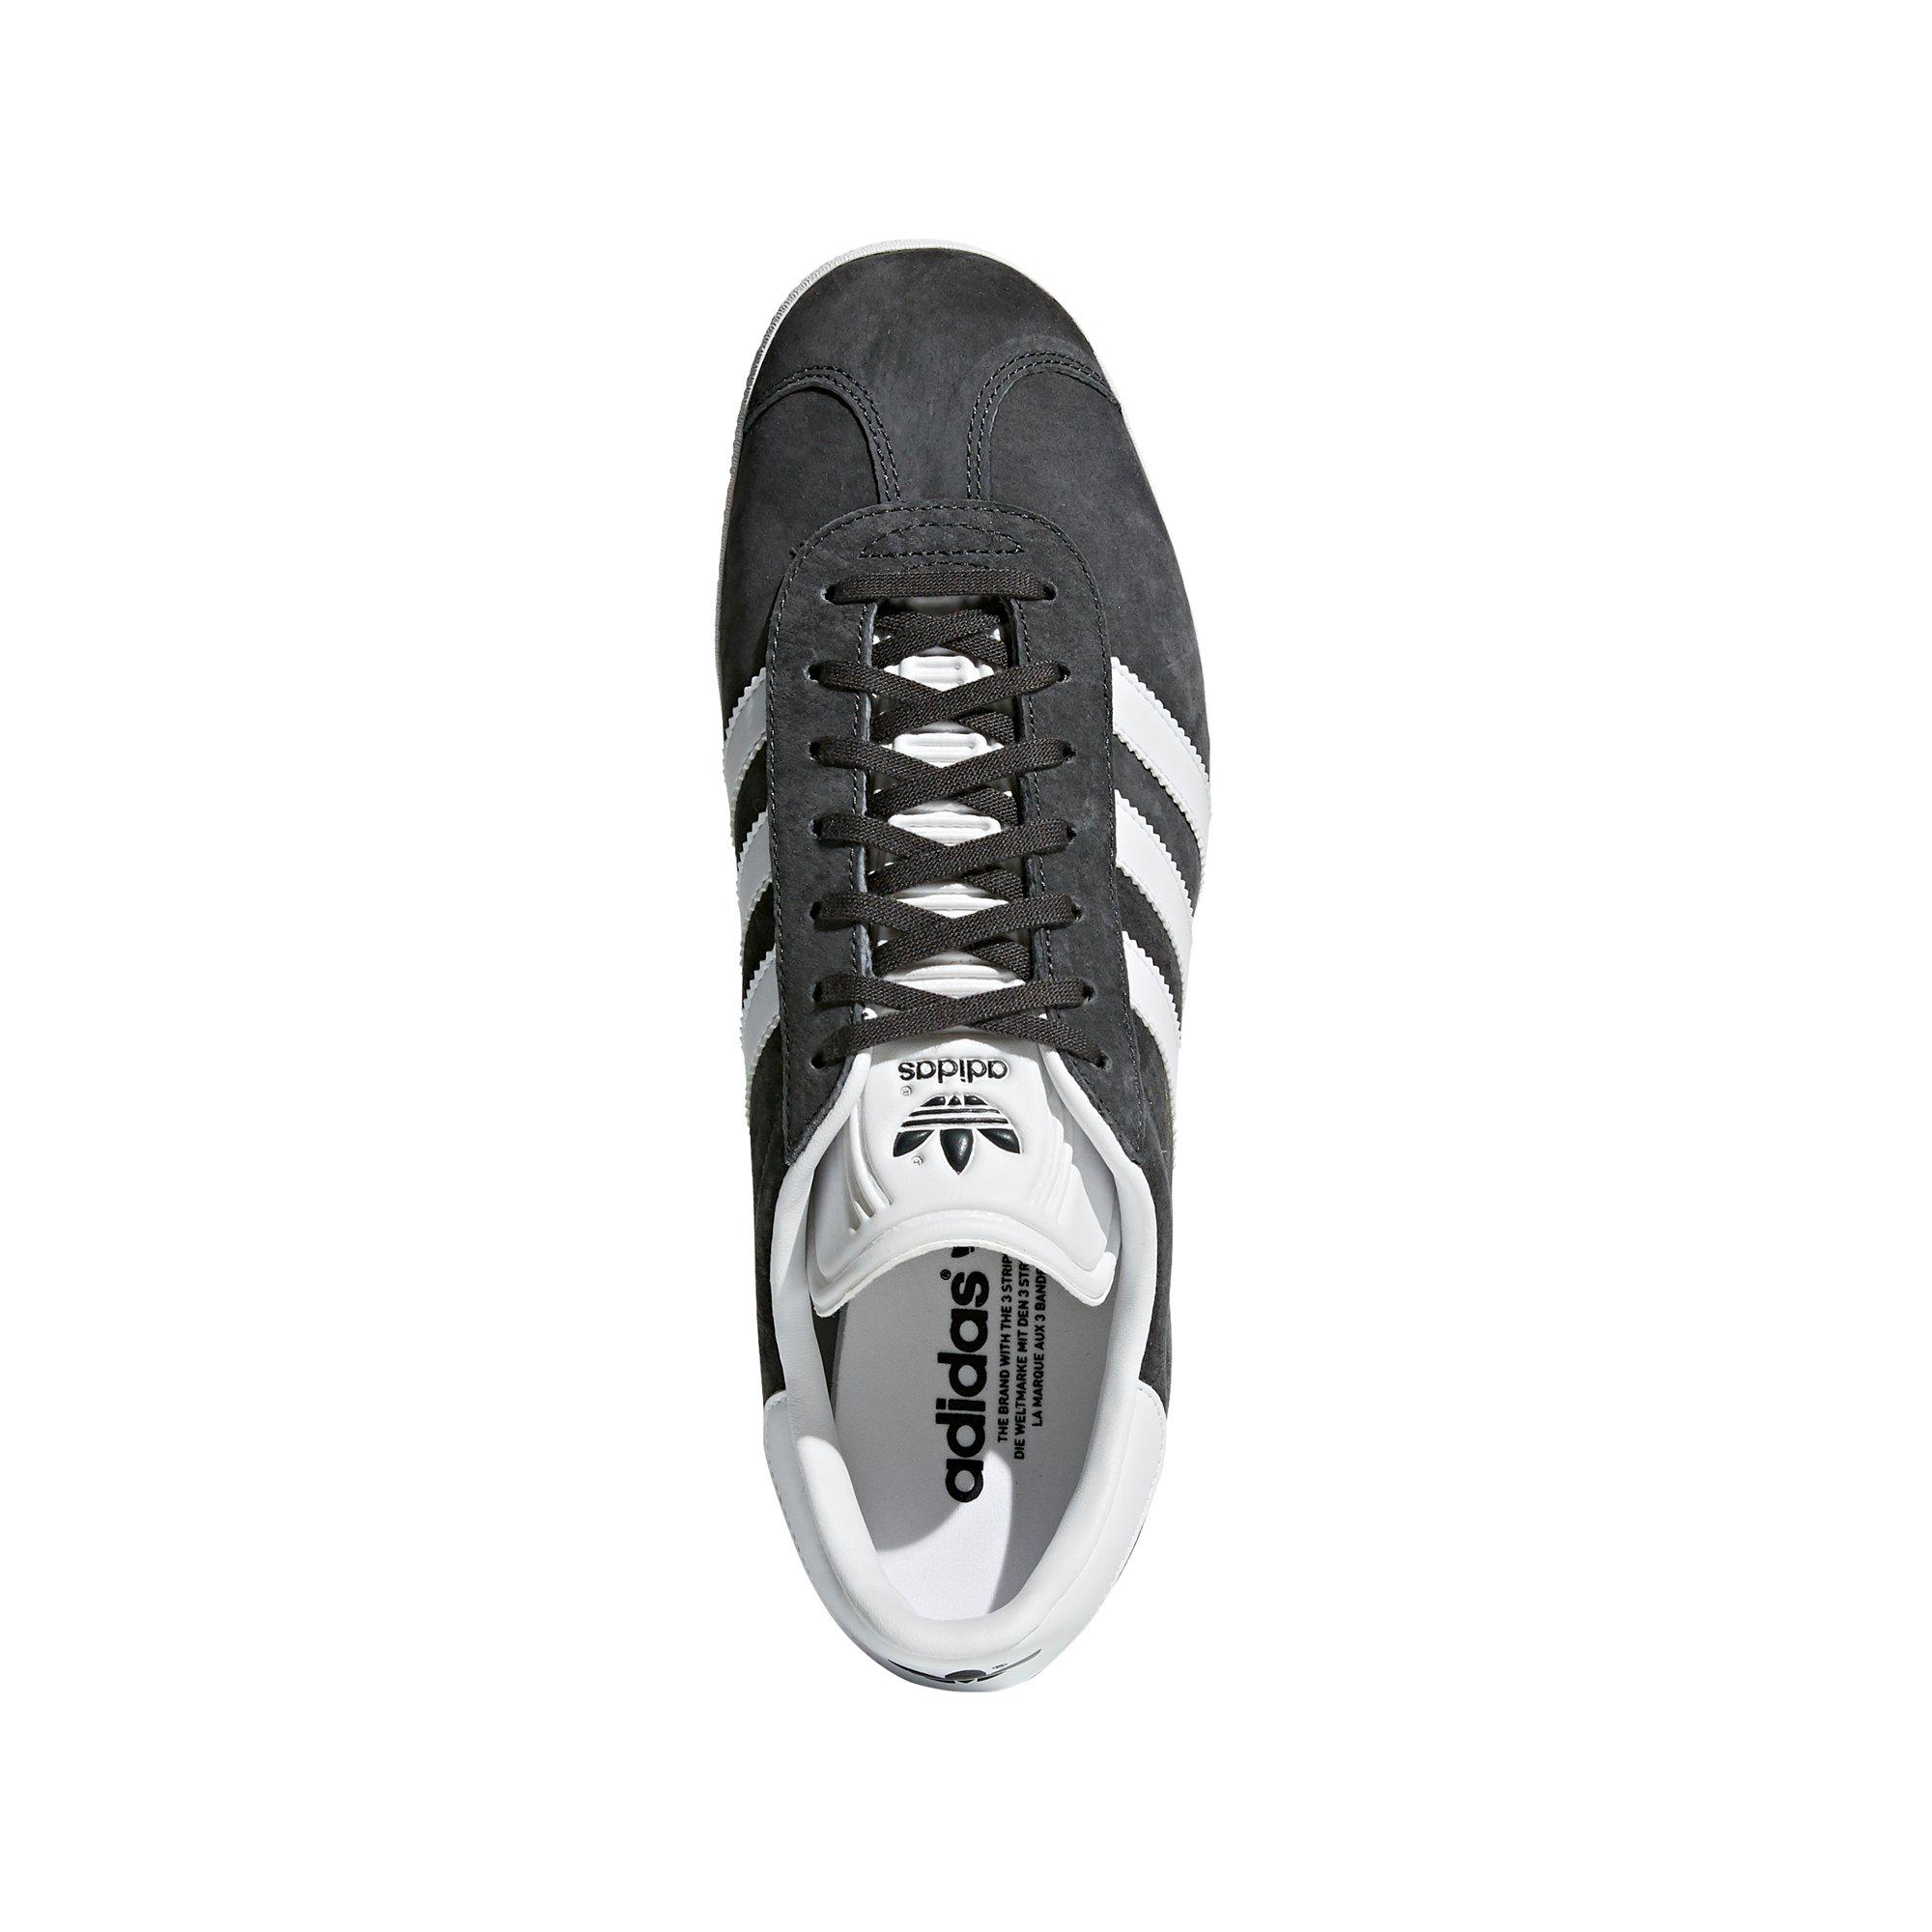 Envolver hielo alquiler adidas Originals Gazelle "Dgh Solid Grey/ White/Gold Metallic" Men's Shoe